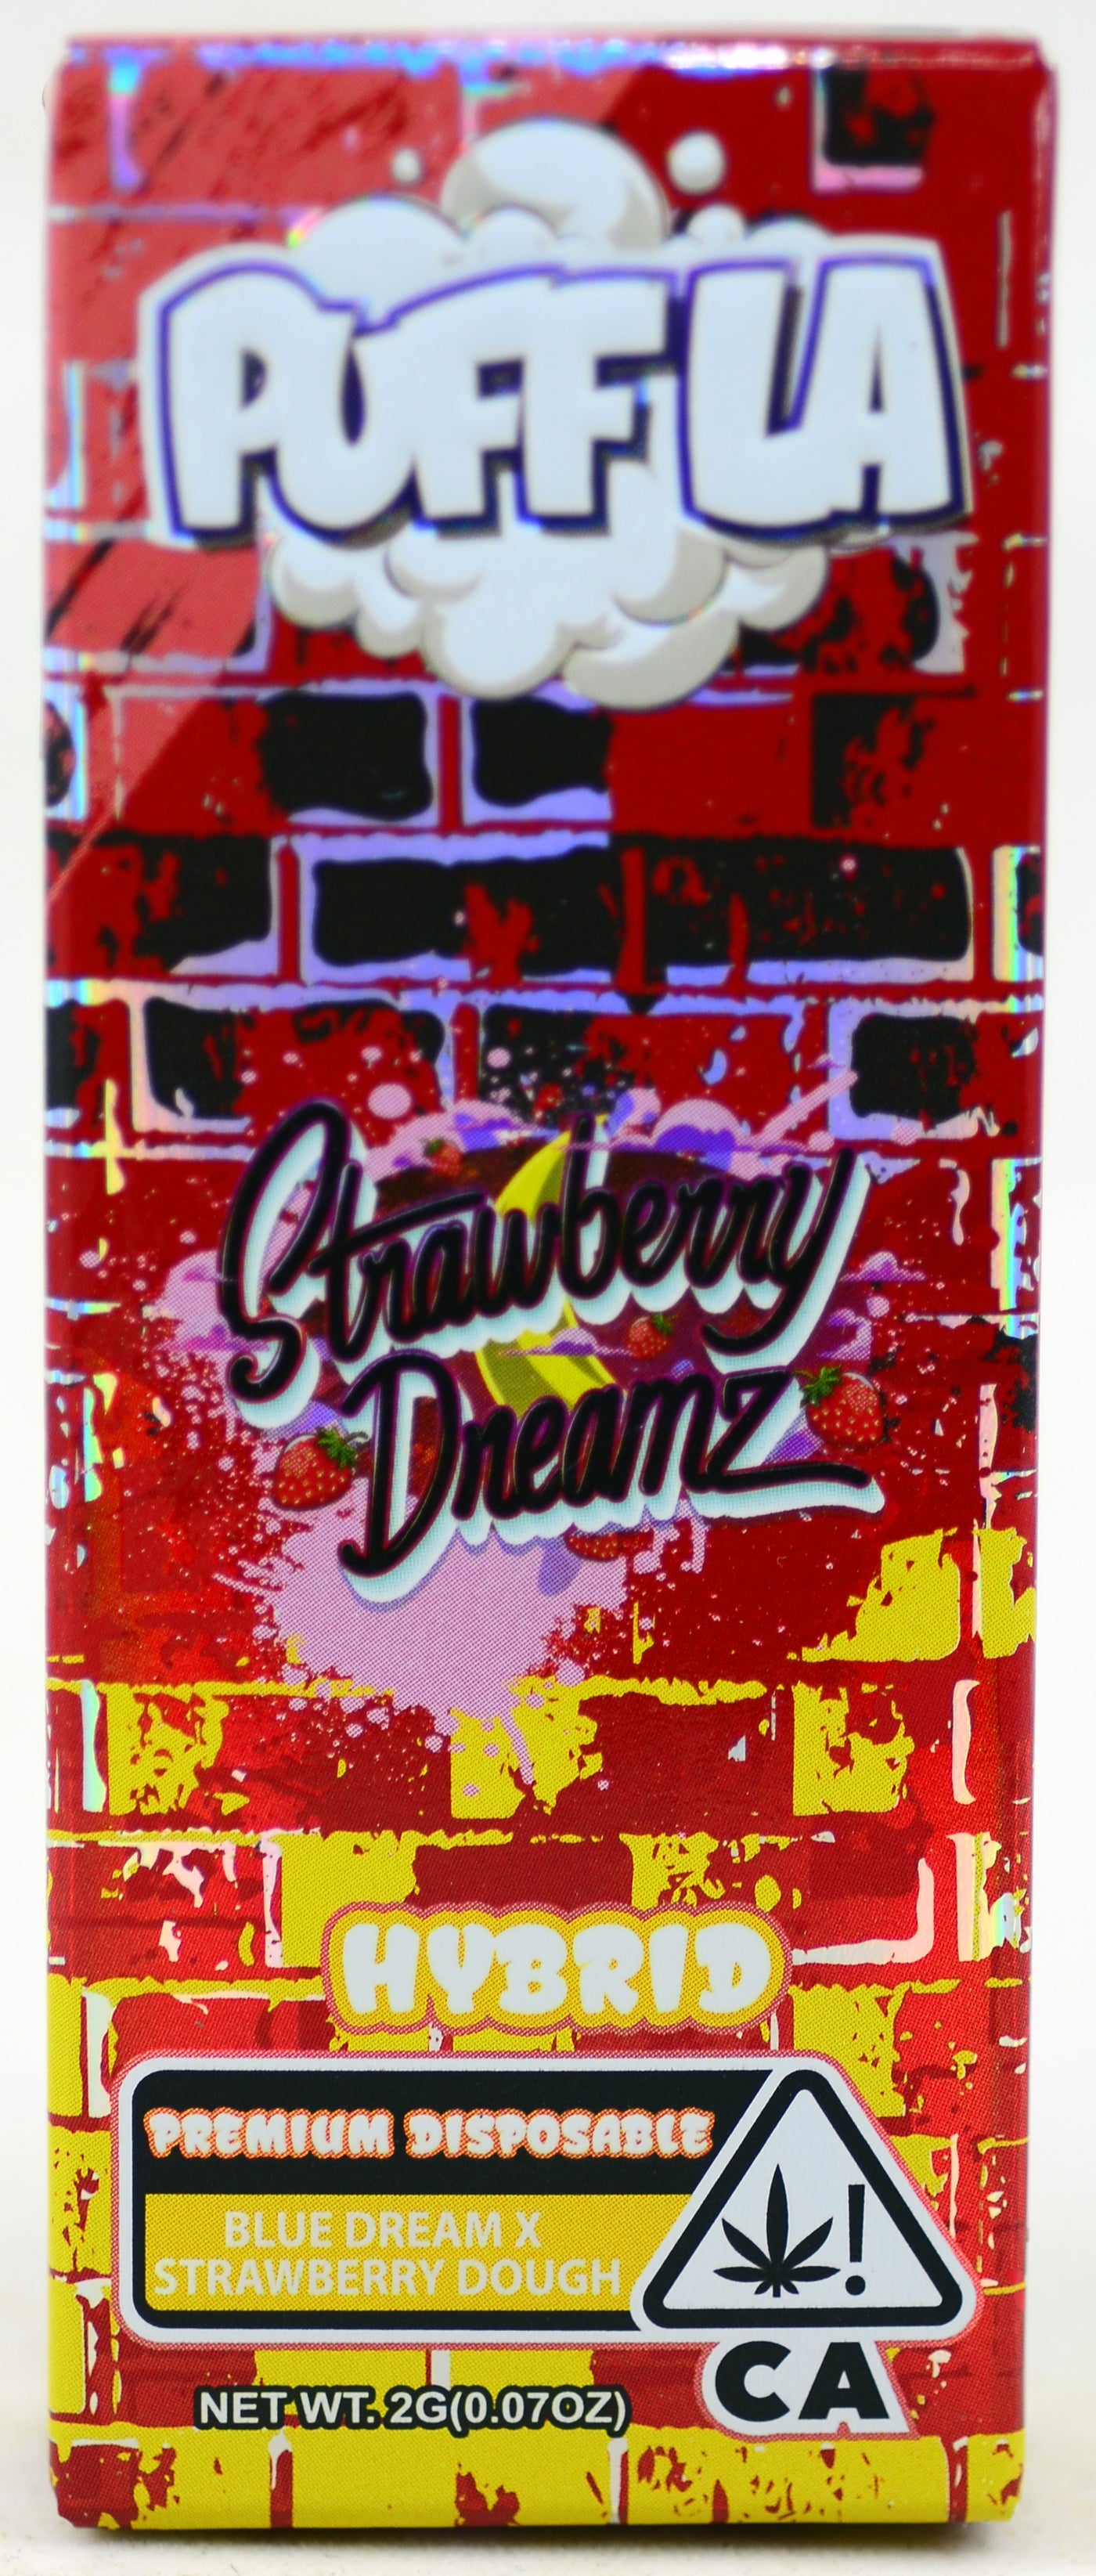 Puff LA 2 gram Disposable Vape - Strawberry Dreamz